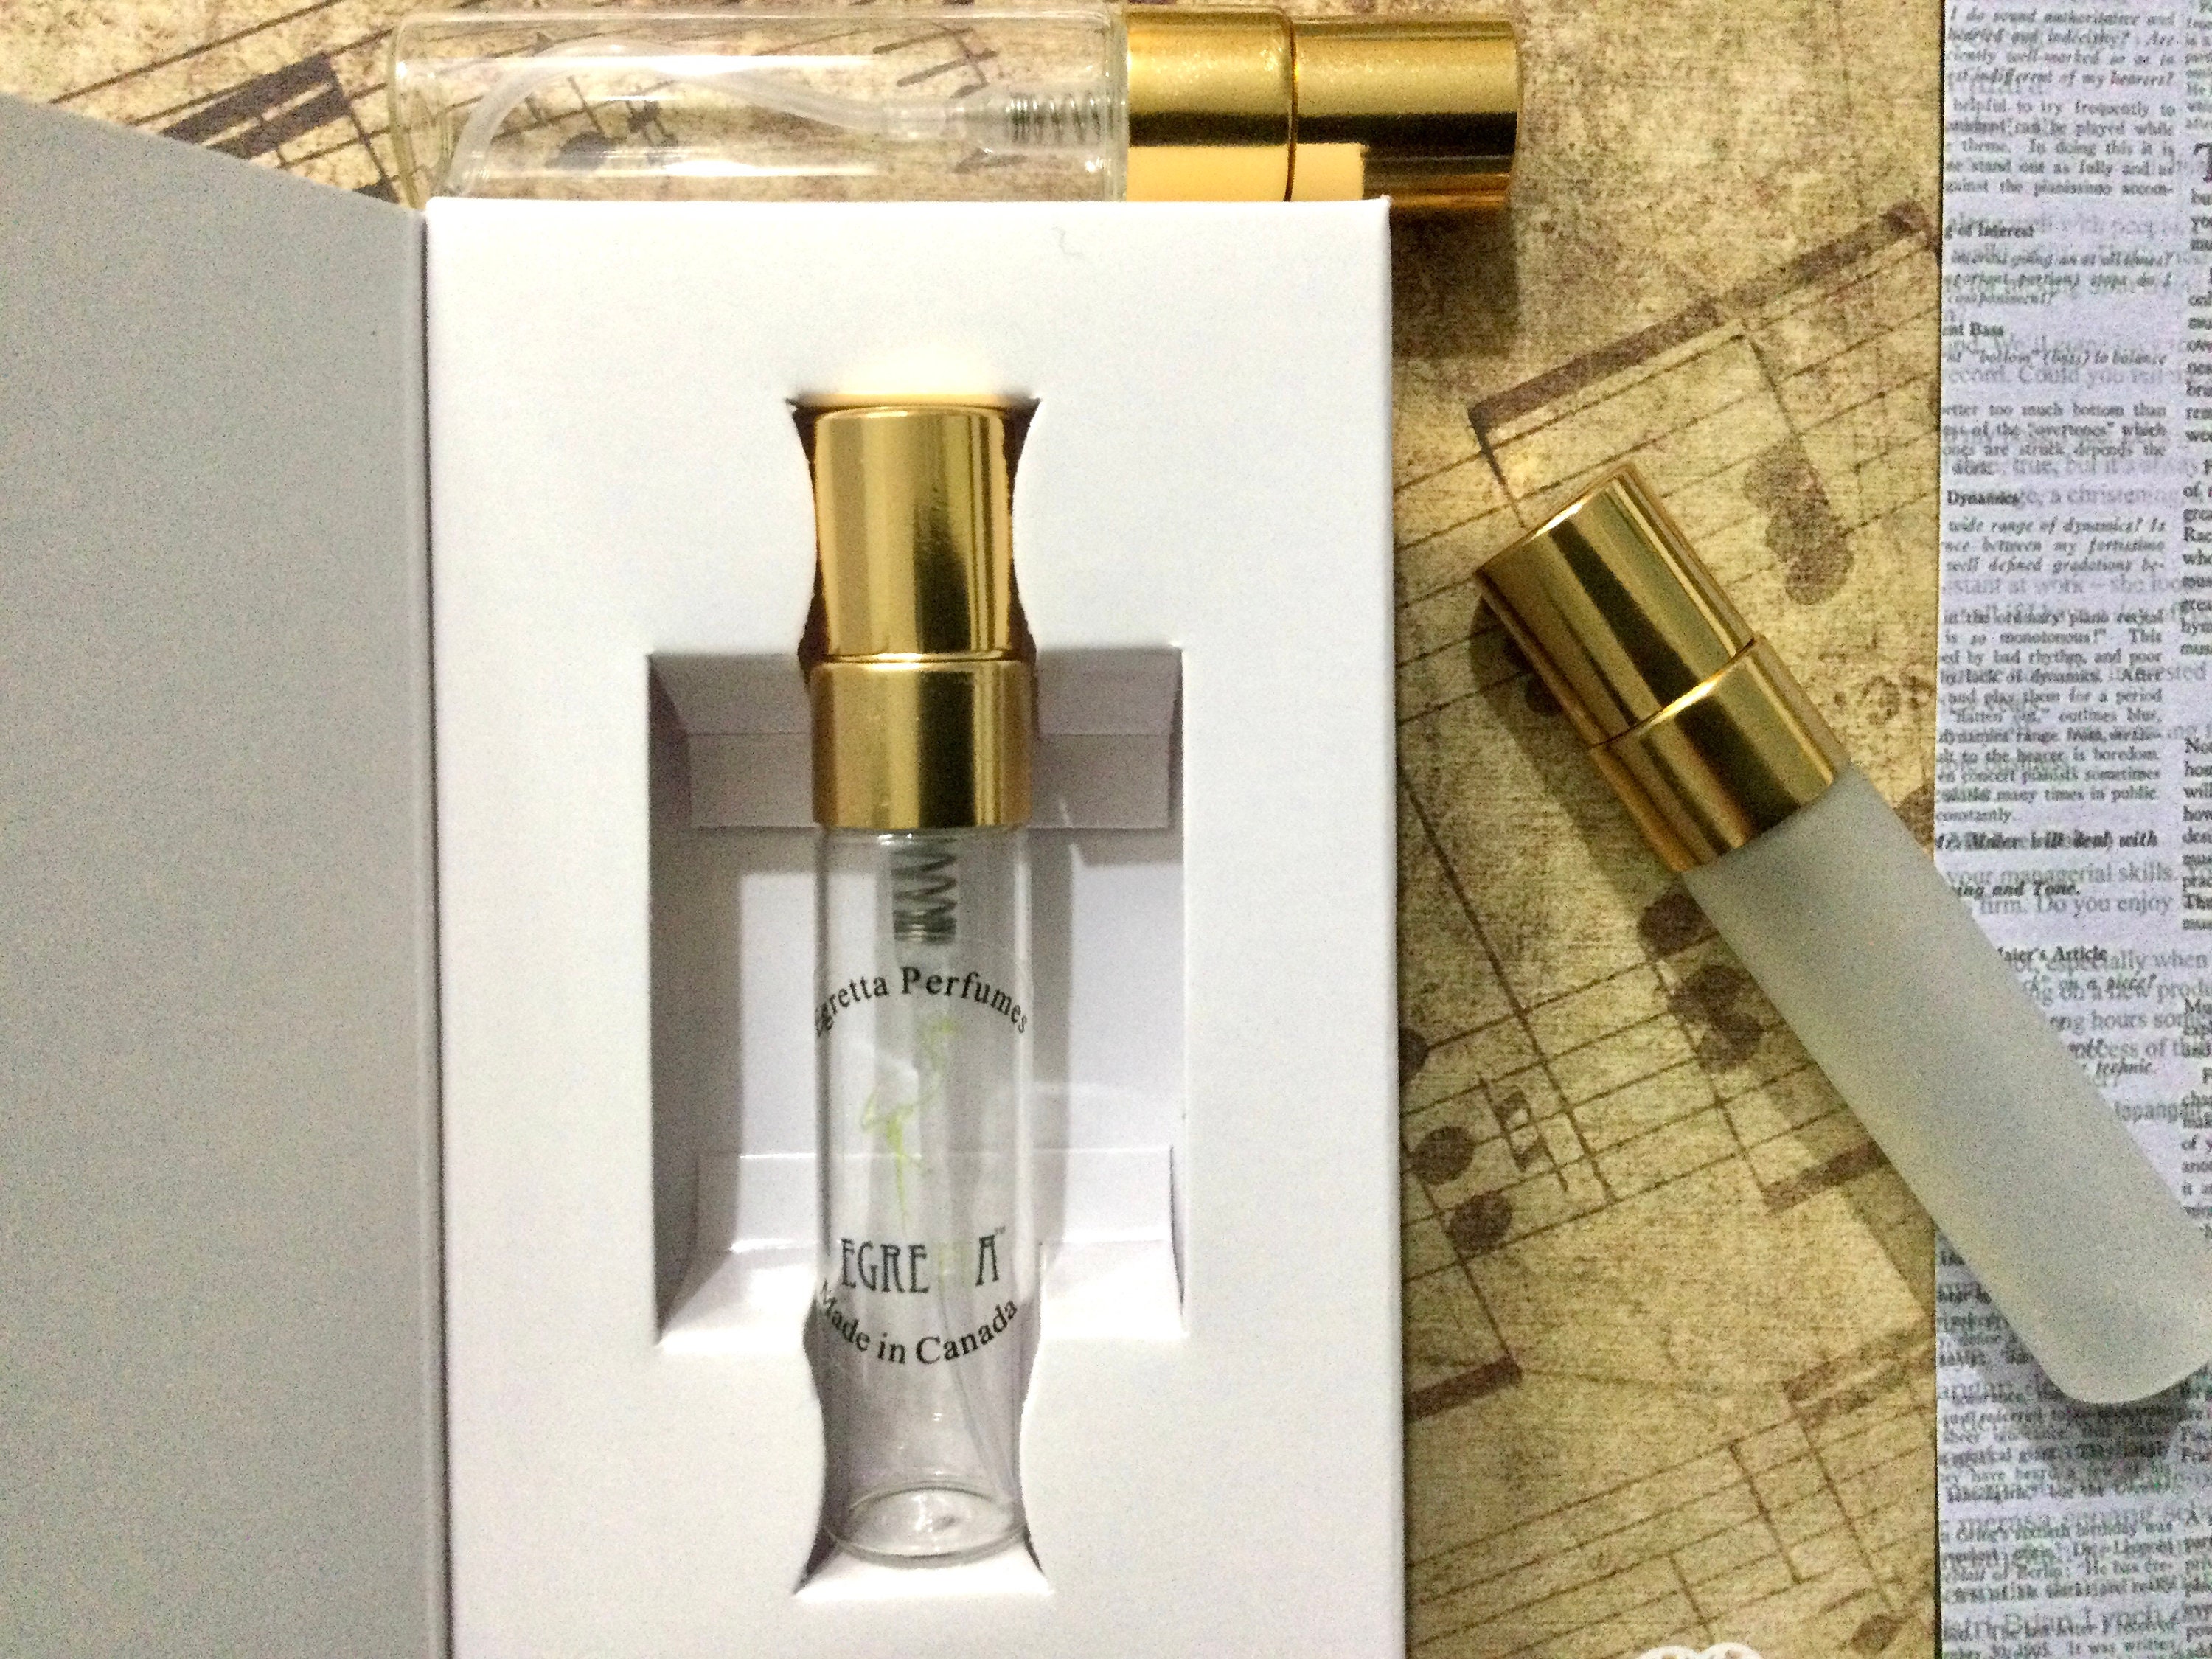 Louis Vuitton LV Sun Song Perfume samples 2ml, Beauty & Personal